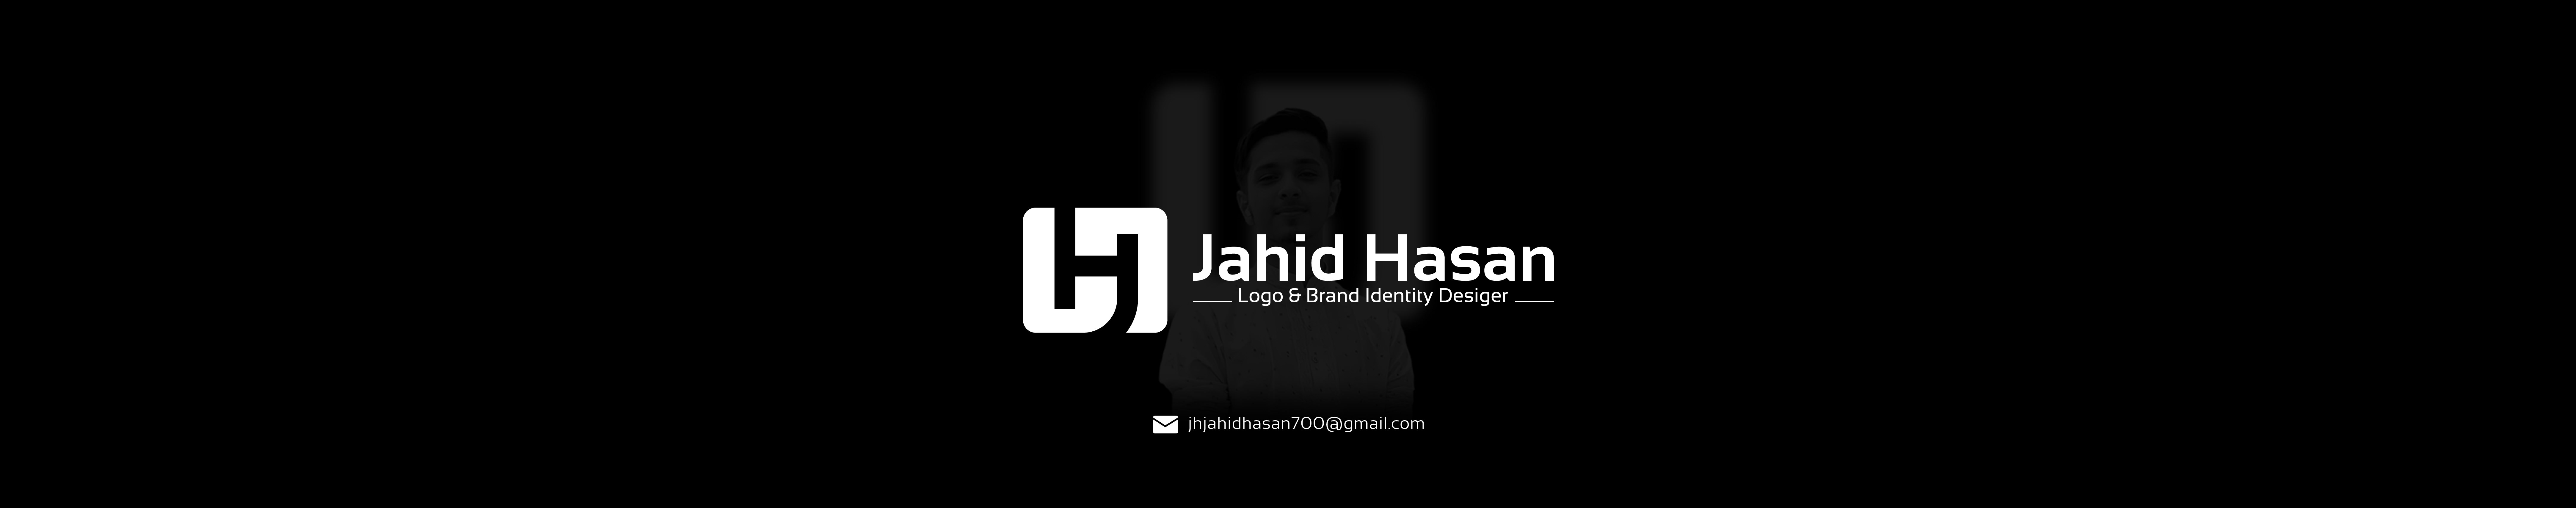 Banner de perfil de Jahid Hasan